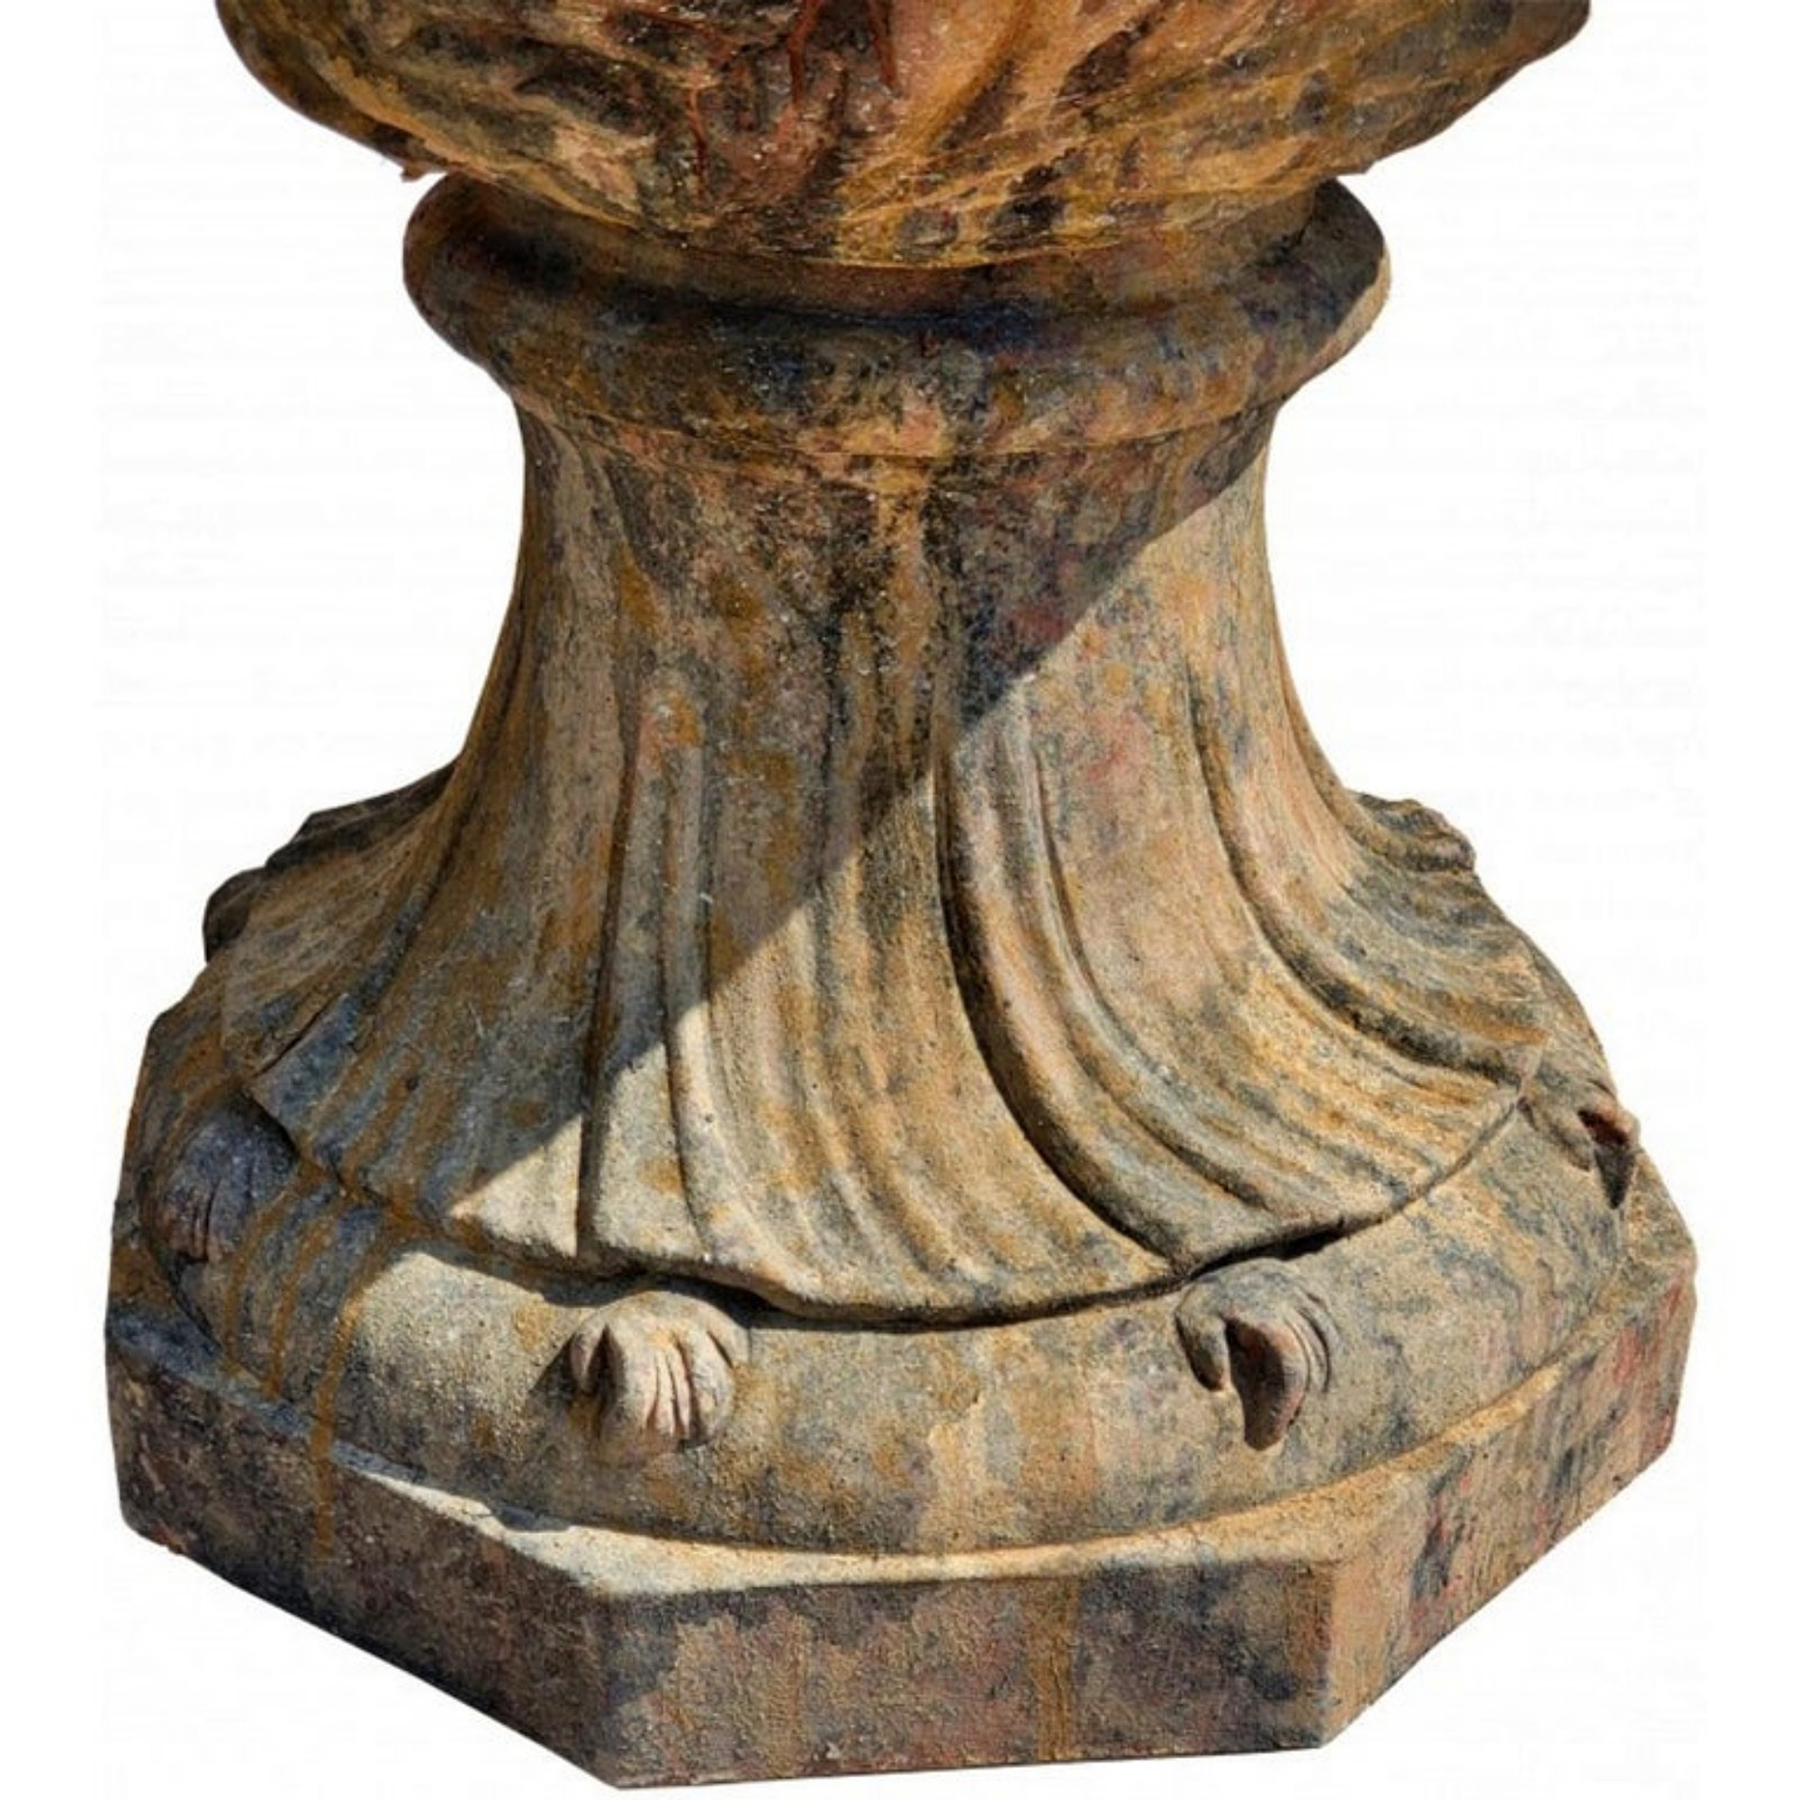 Pair of Florentine Vases (Italy) in Impruneta terracotta late 19th century - Image 2 of 2